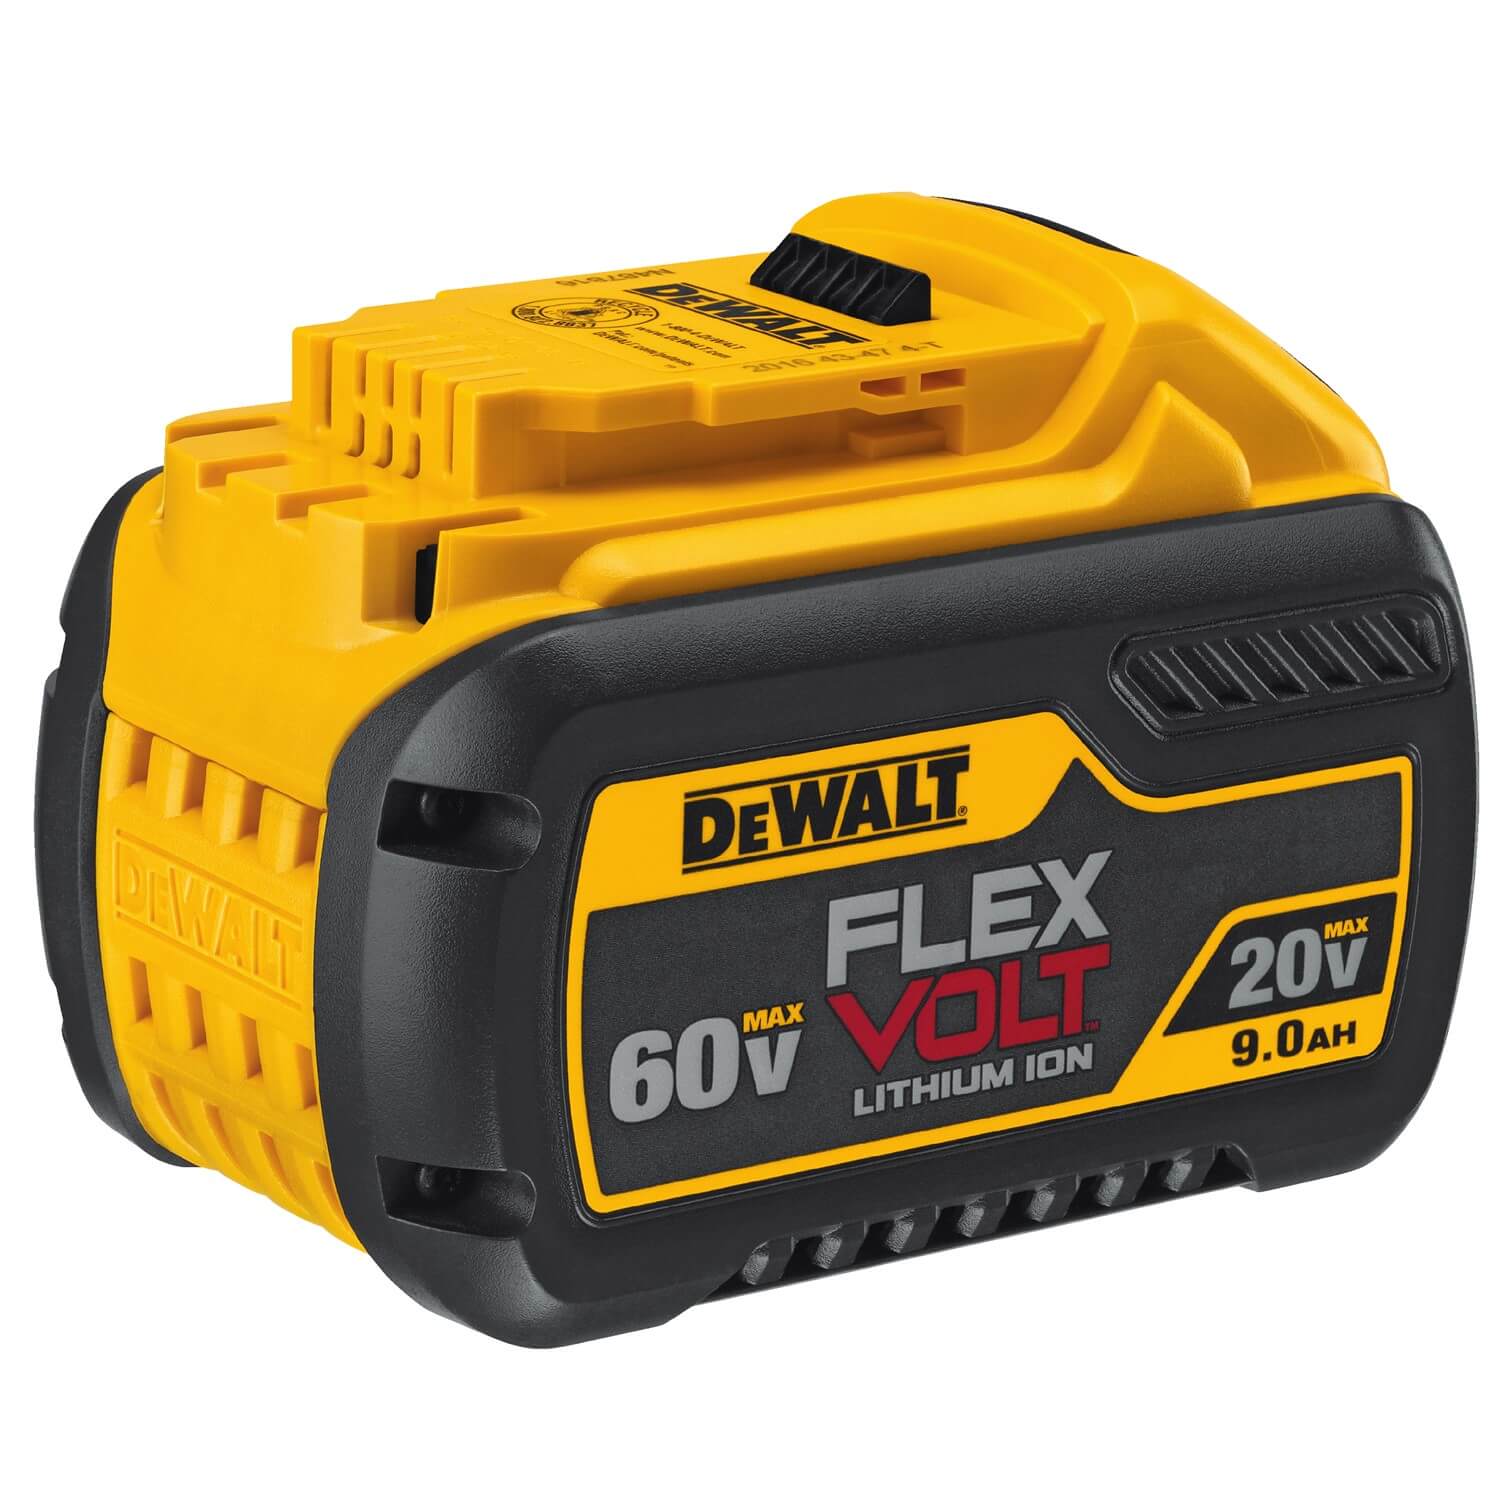 DEWALT, DeWalt DCB609 - 60V FlexVolt 9.0Ah Battery